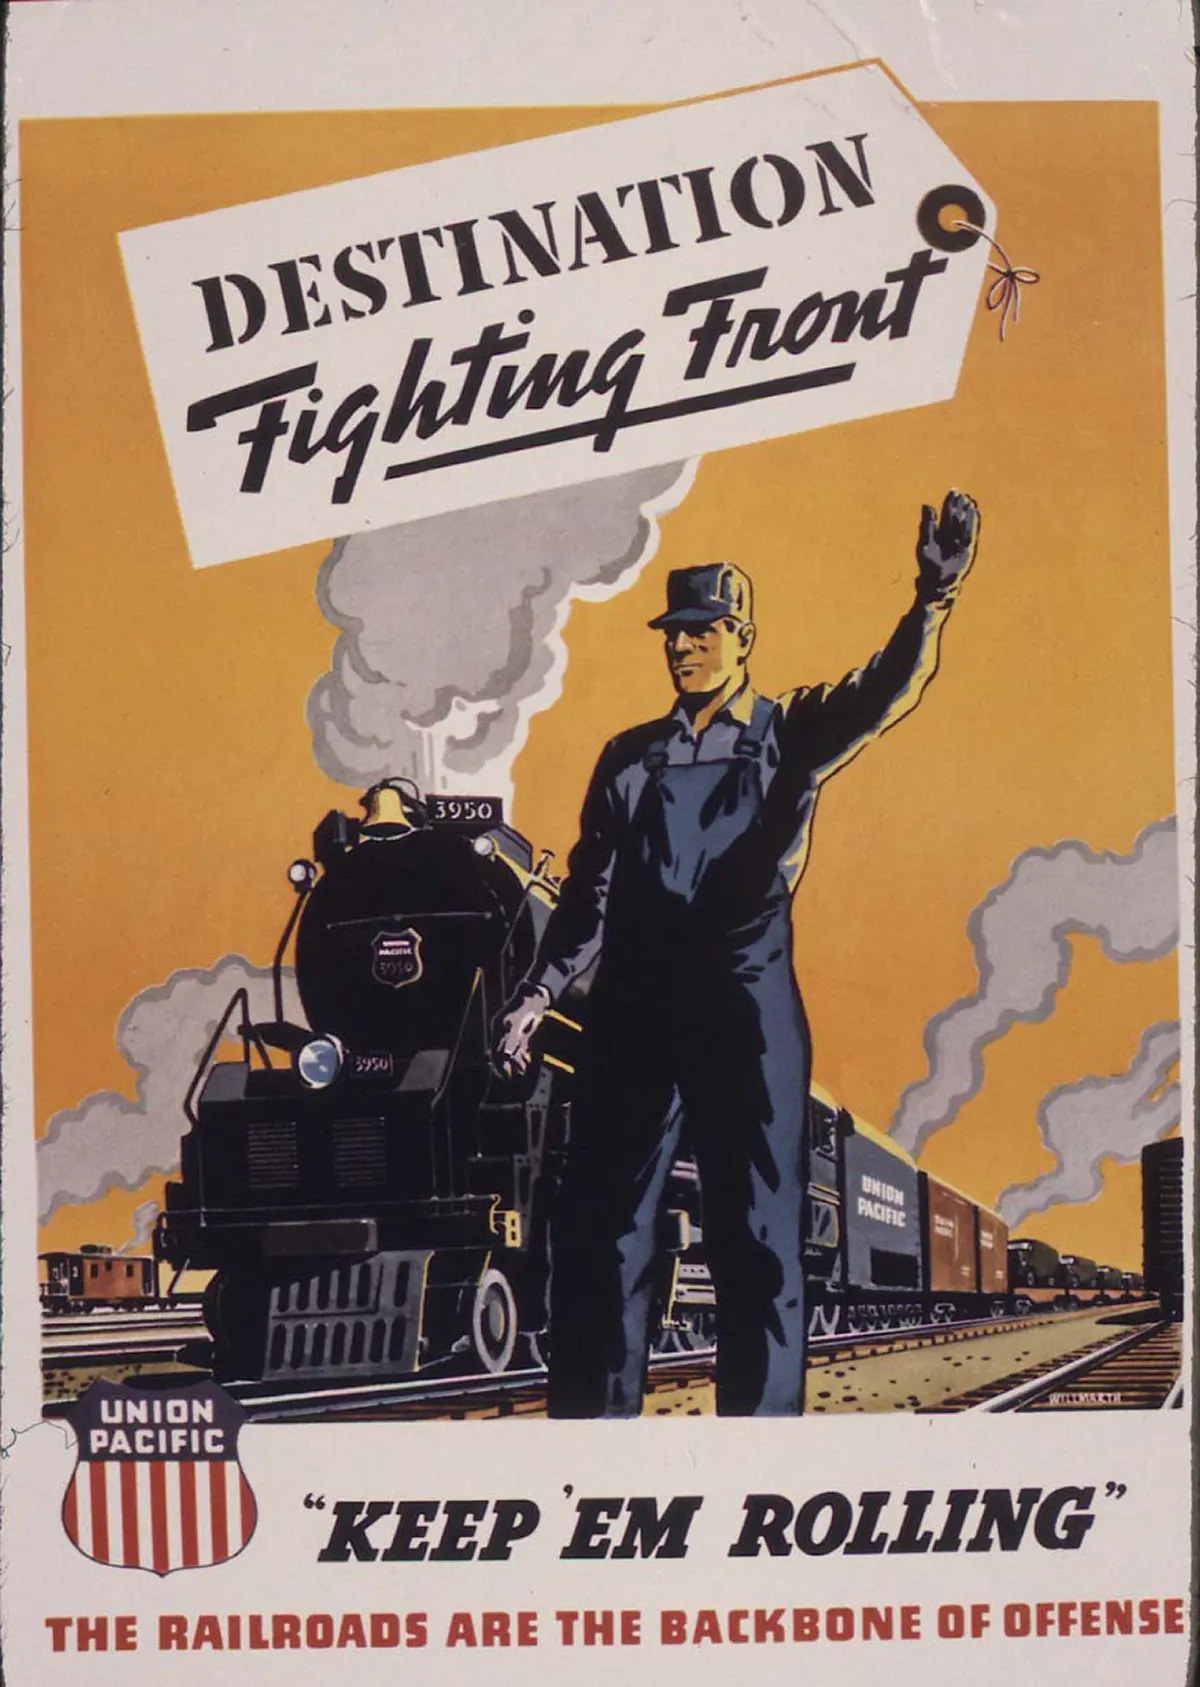 A propaganda poster during World War Two.